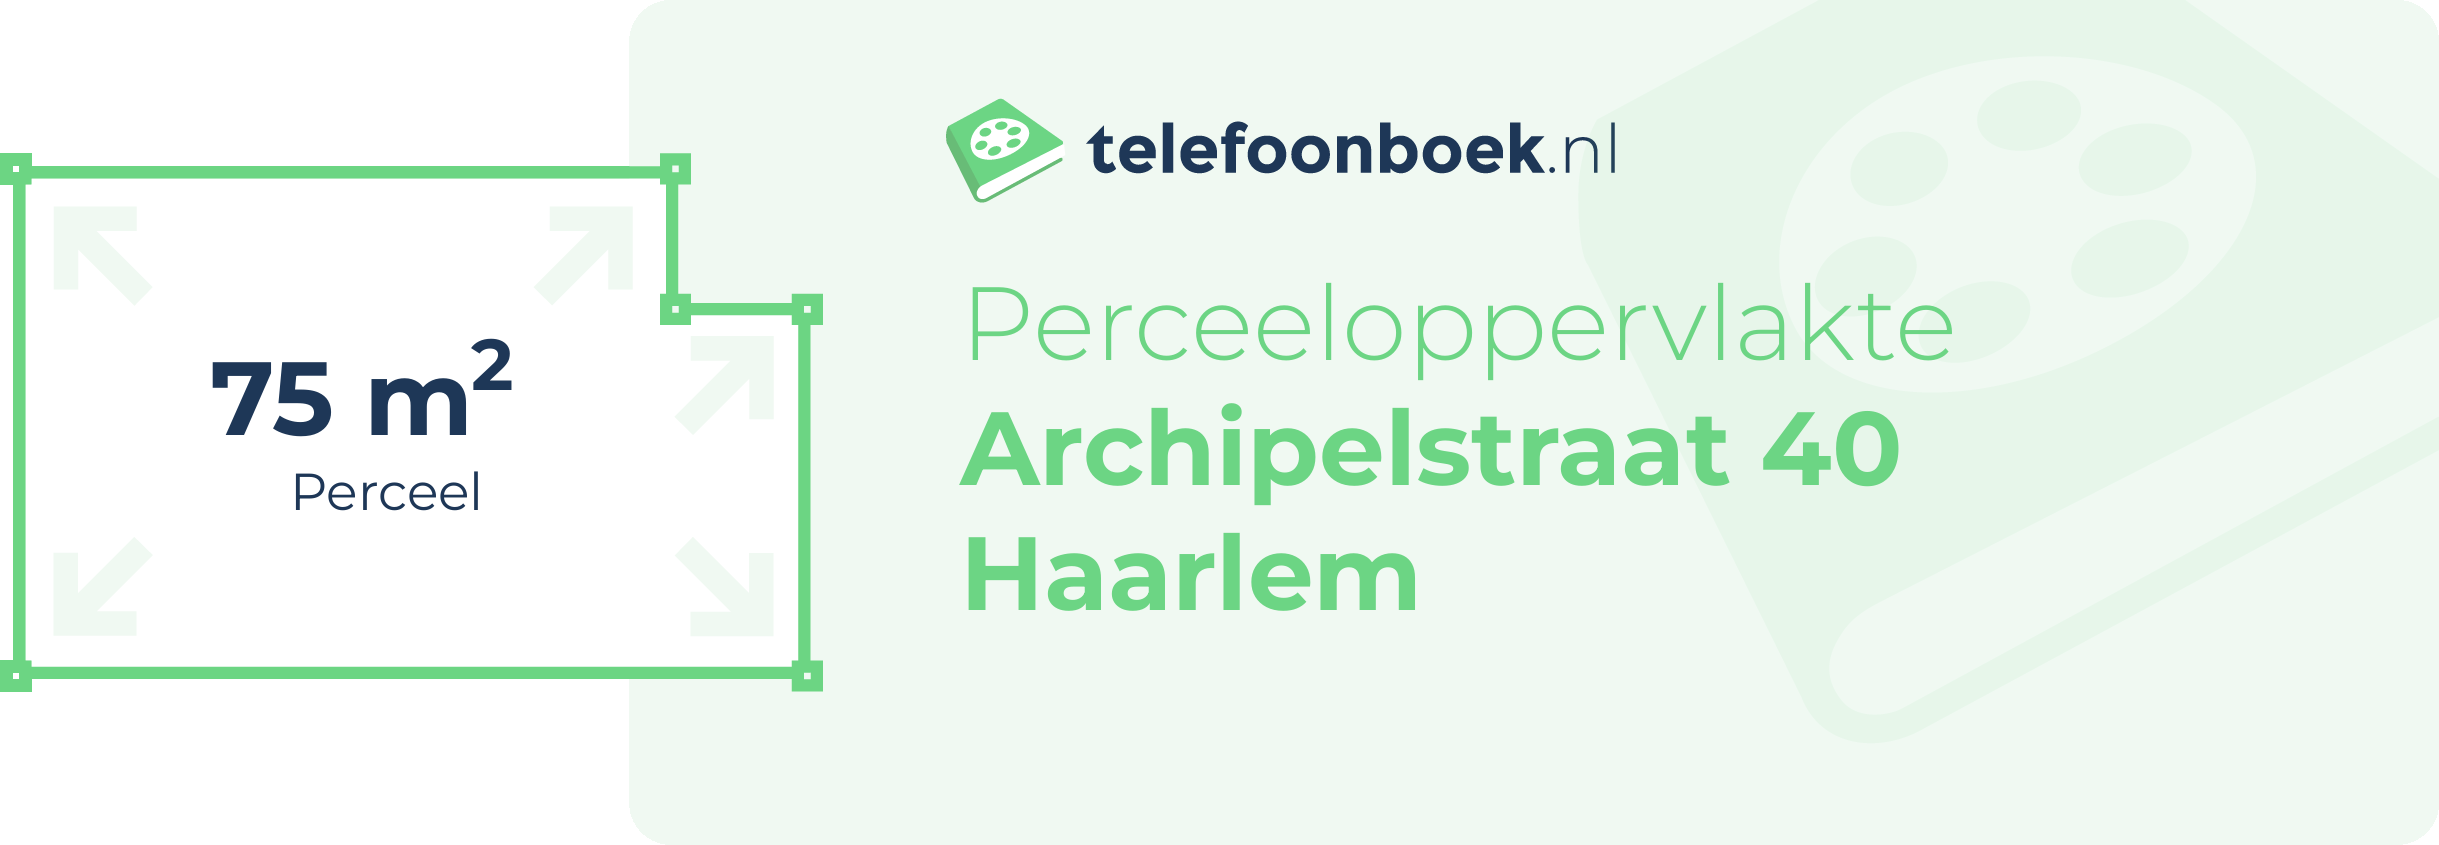 Perceeloppervlakte Archipelstraat 40 Haarlem